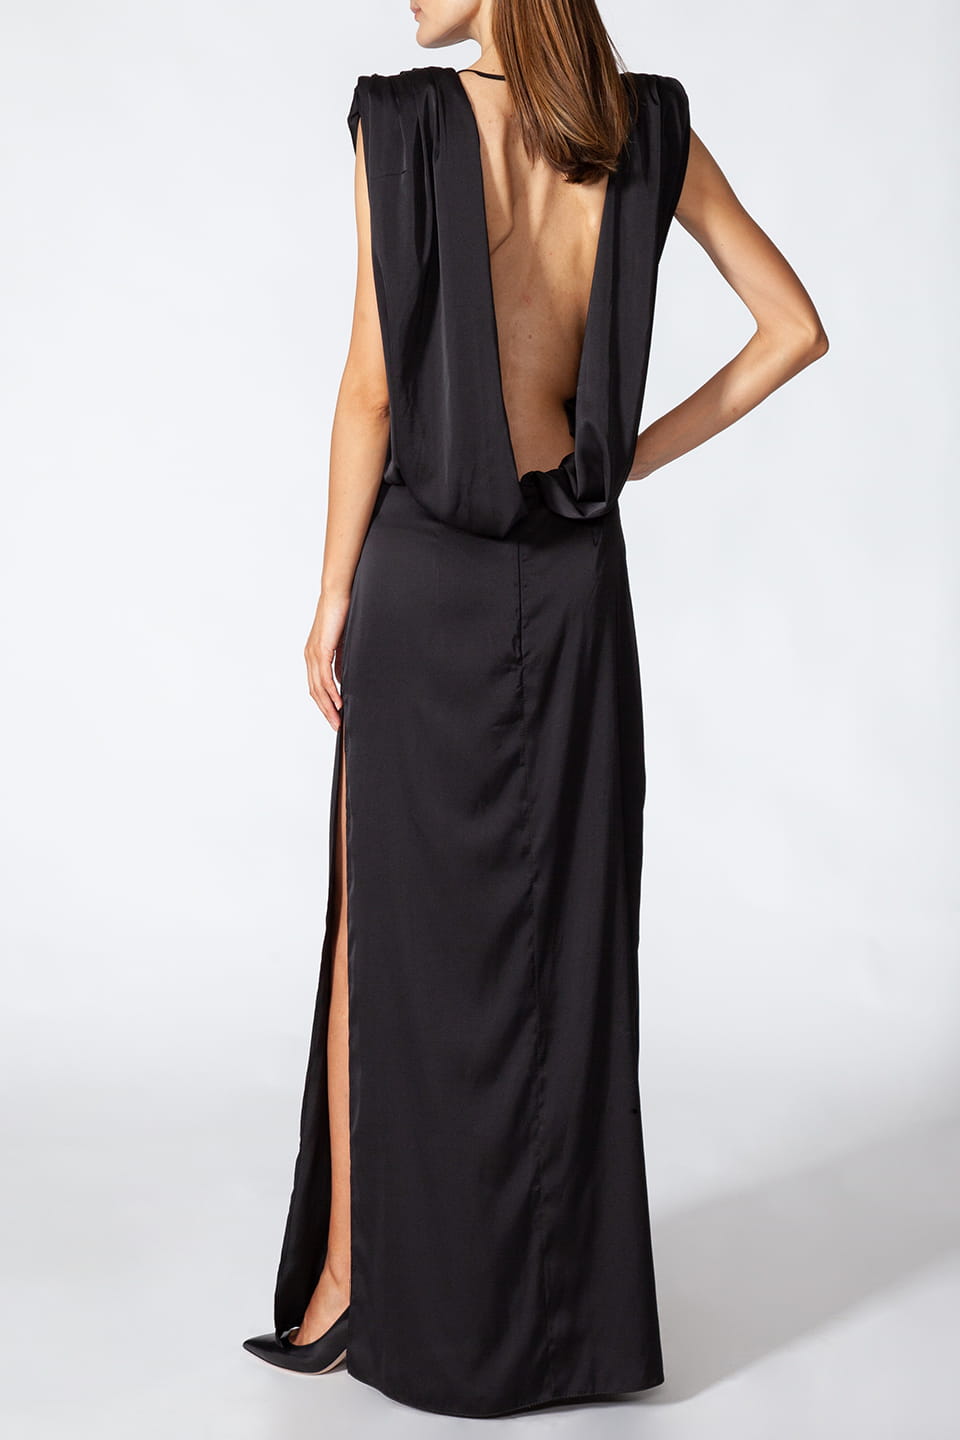 Black Maxi dress from fashion designer in UAE